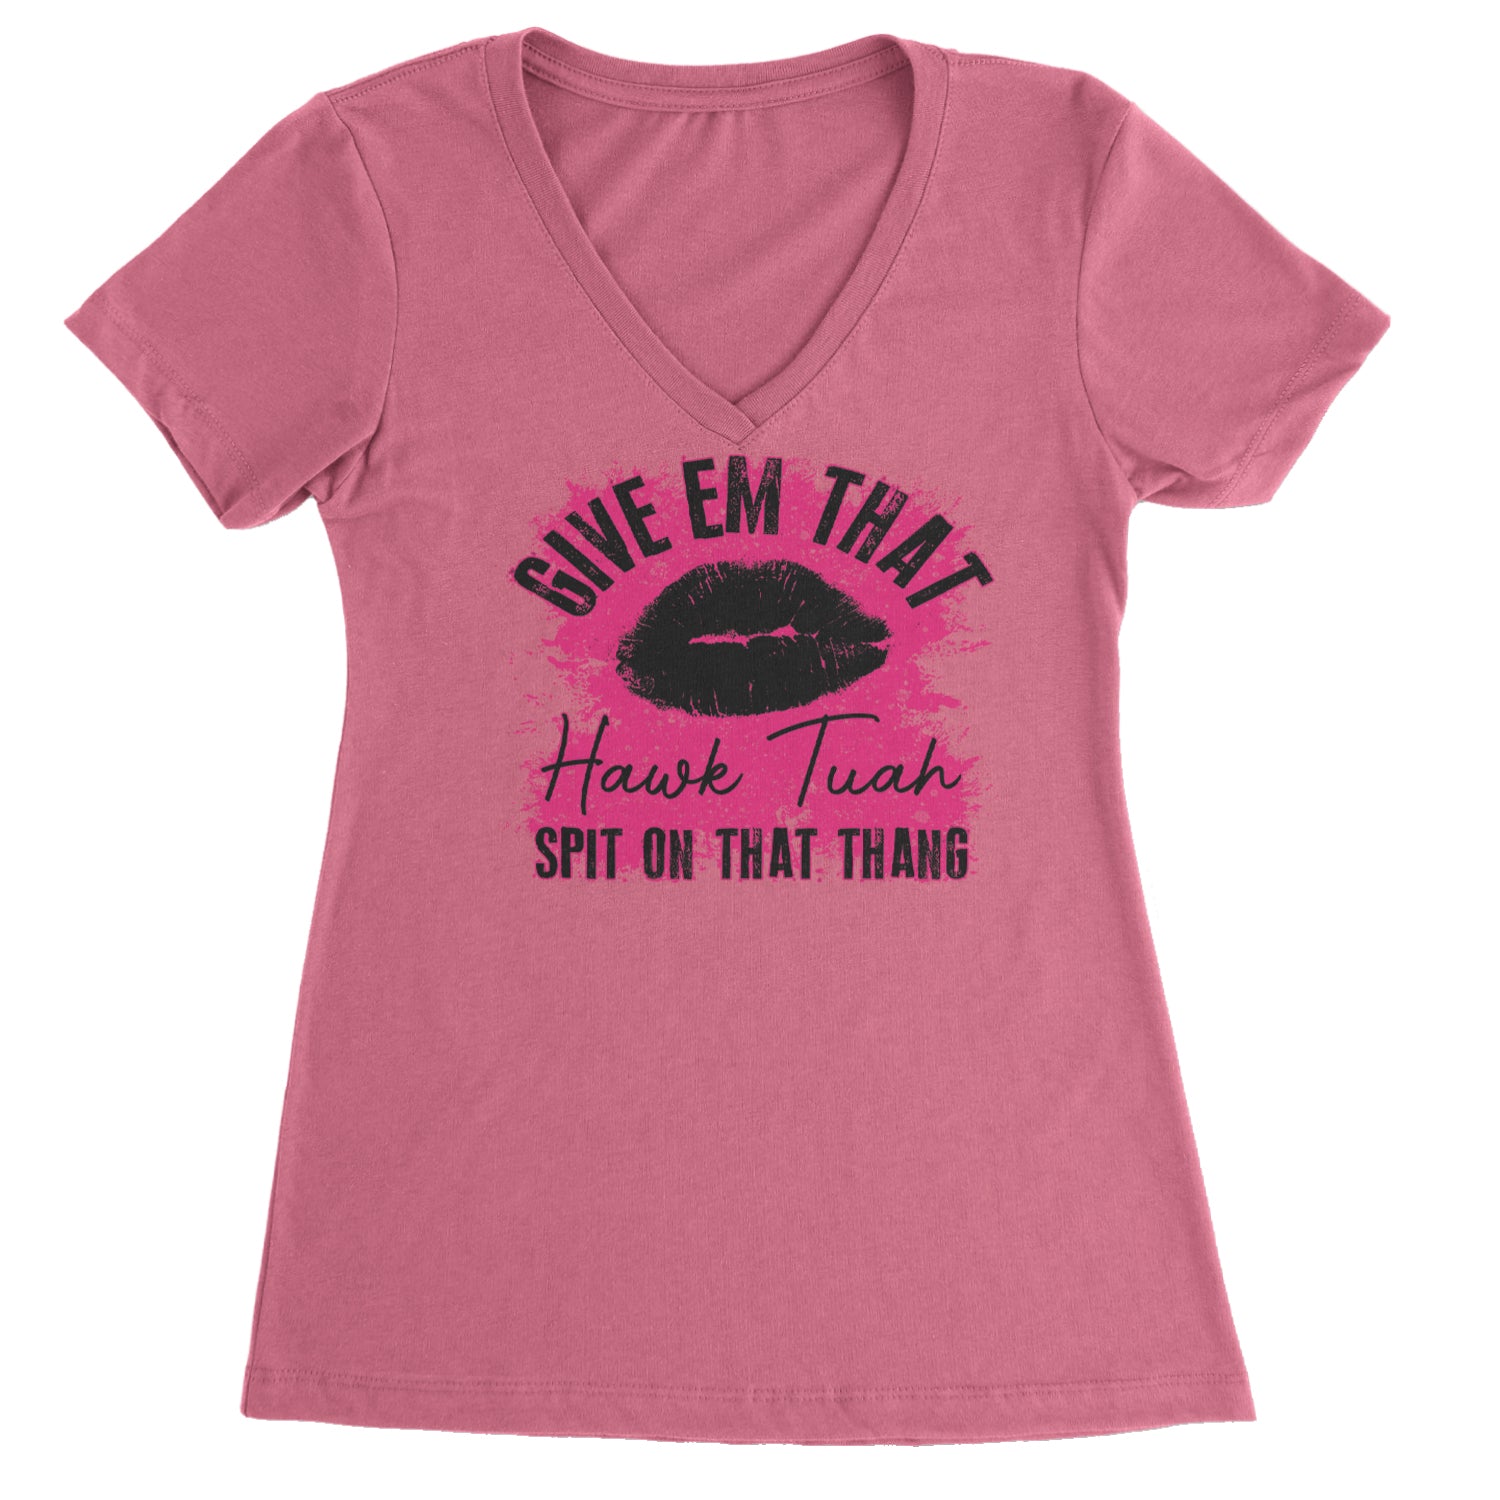 Give 'Em Hawk Tuah Spit On That Thang Ladies V-Neck T-shirt Hot Pink